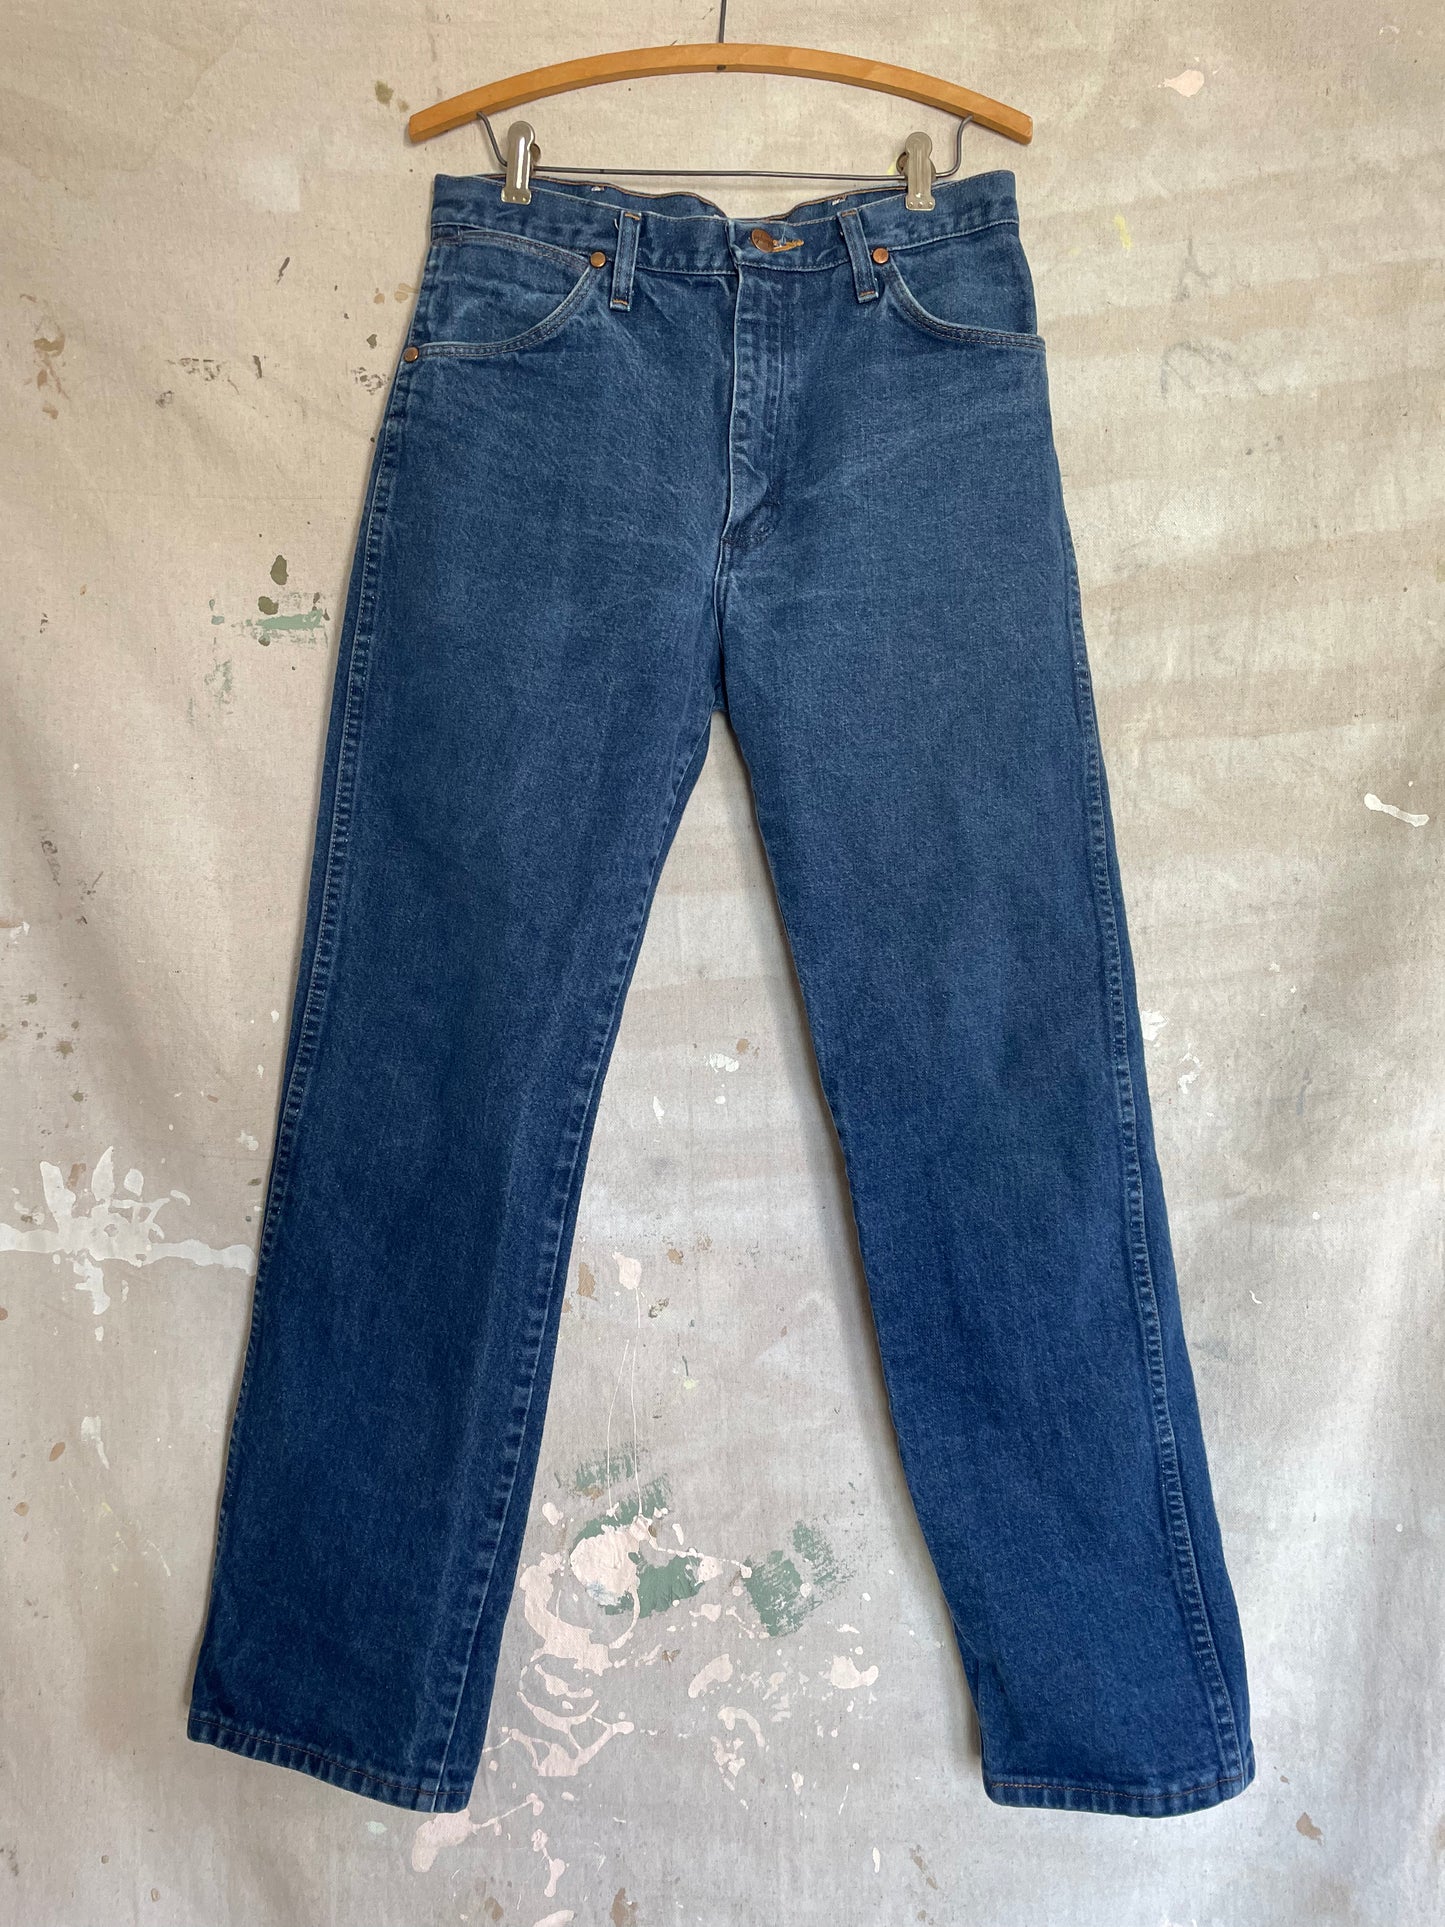 90s Wrangler 13MWZ Jeans